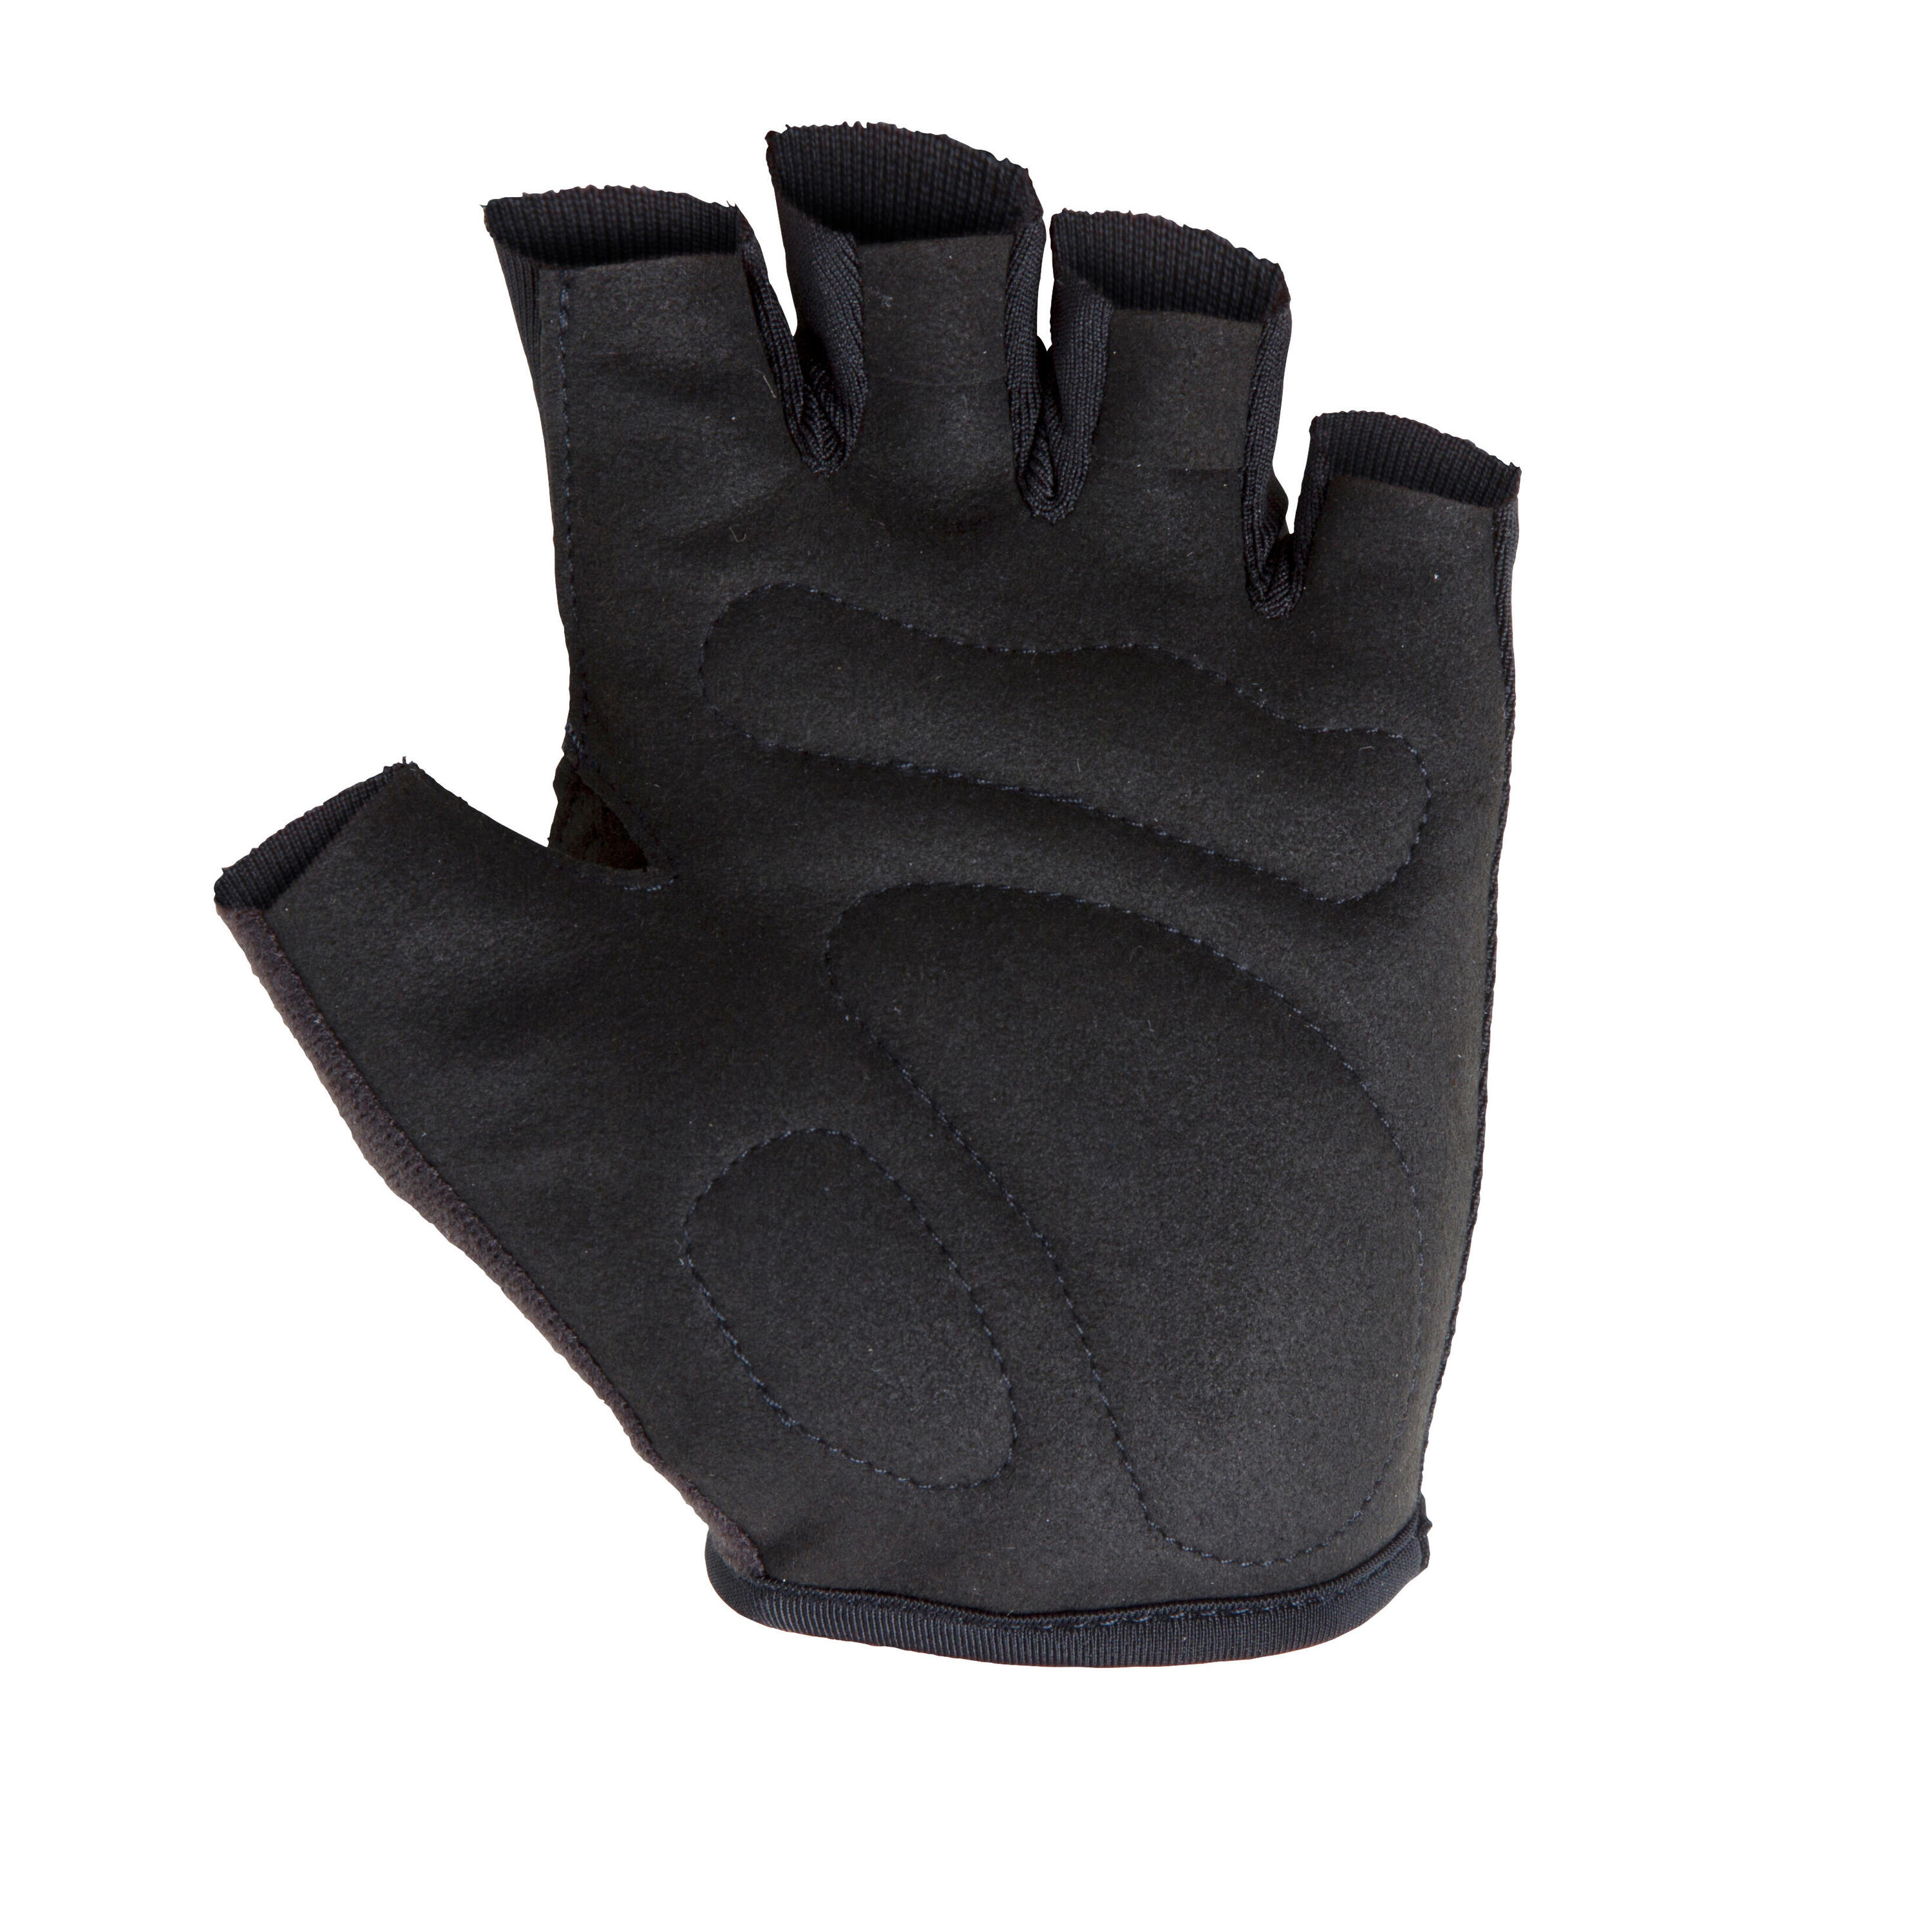 100 Kids' Fingerless Cycling Gloves - Black 2/3